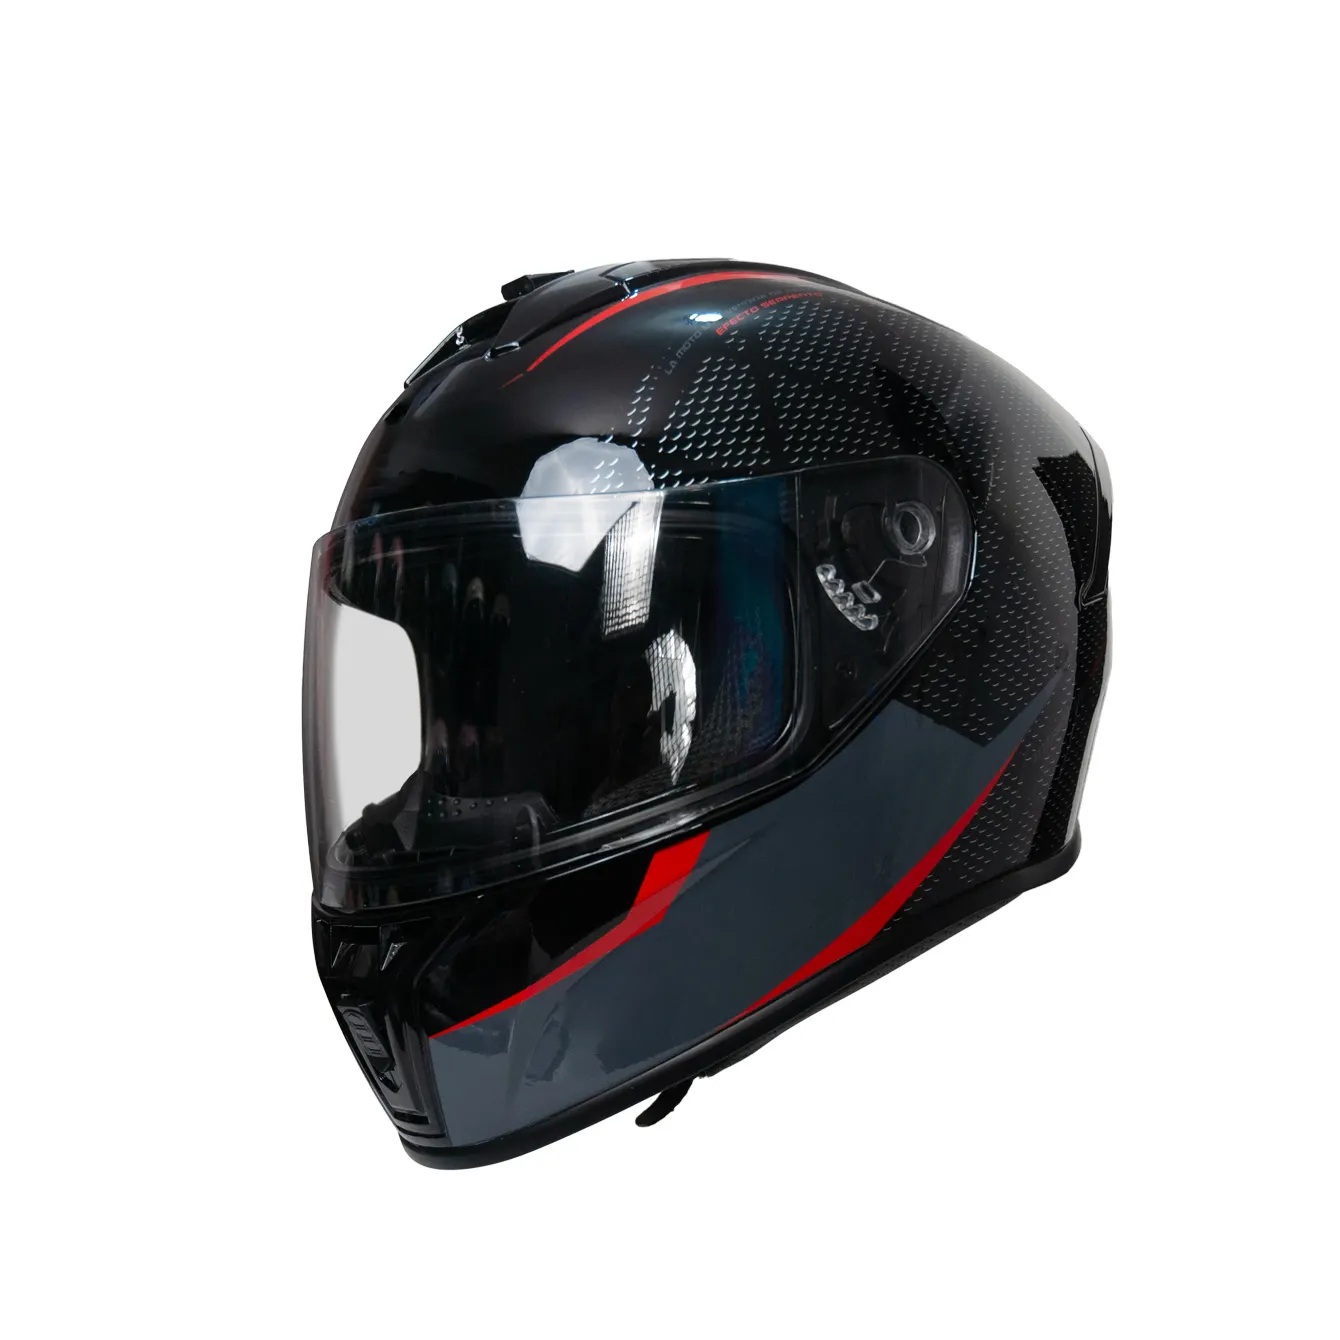 Helm sepeda motor Full Face empat musim, helm berkendara sepeda motor